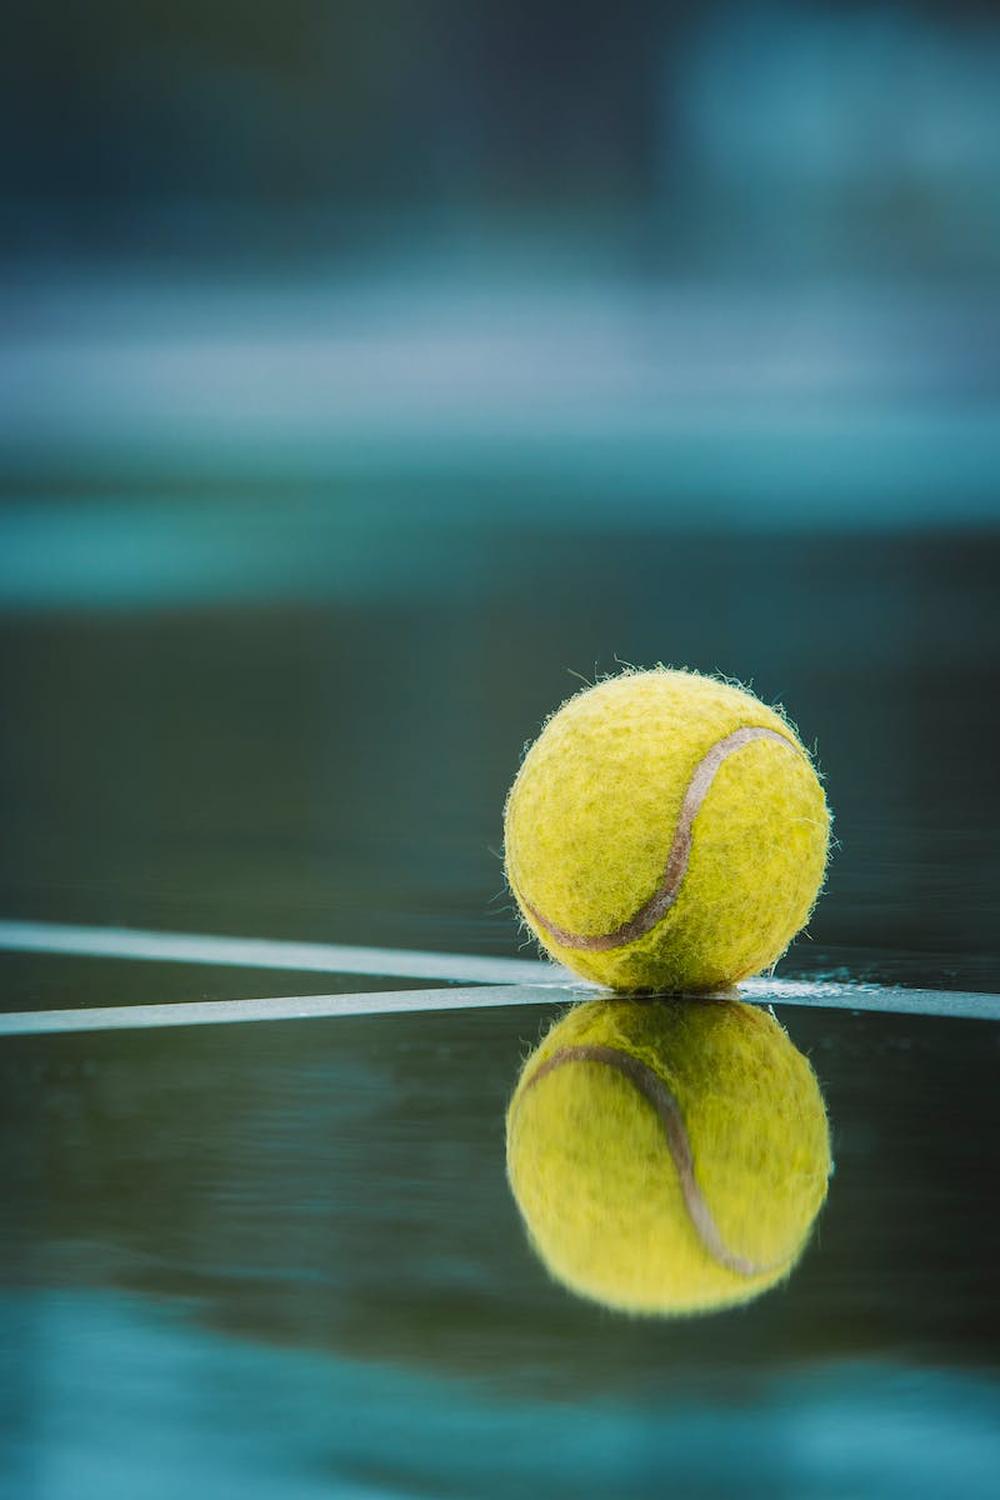 selective_focus_photography_of_tennis_ball_on_floo